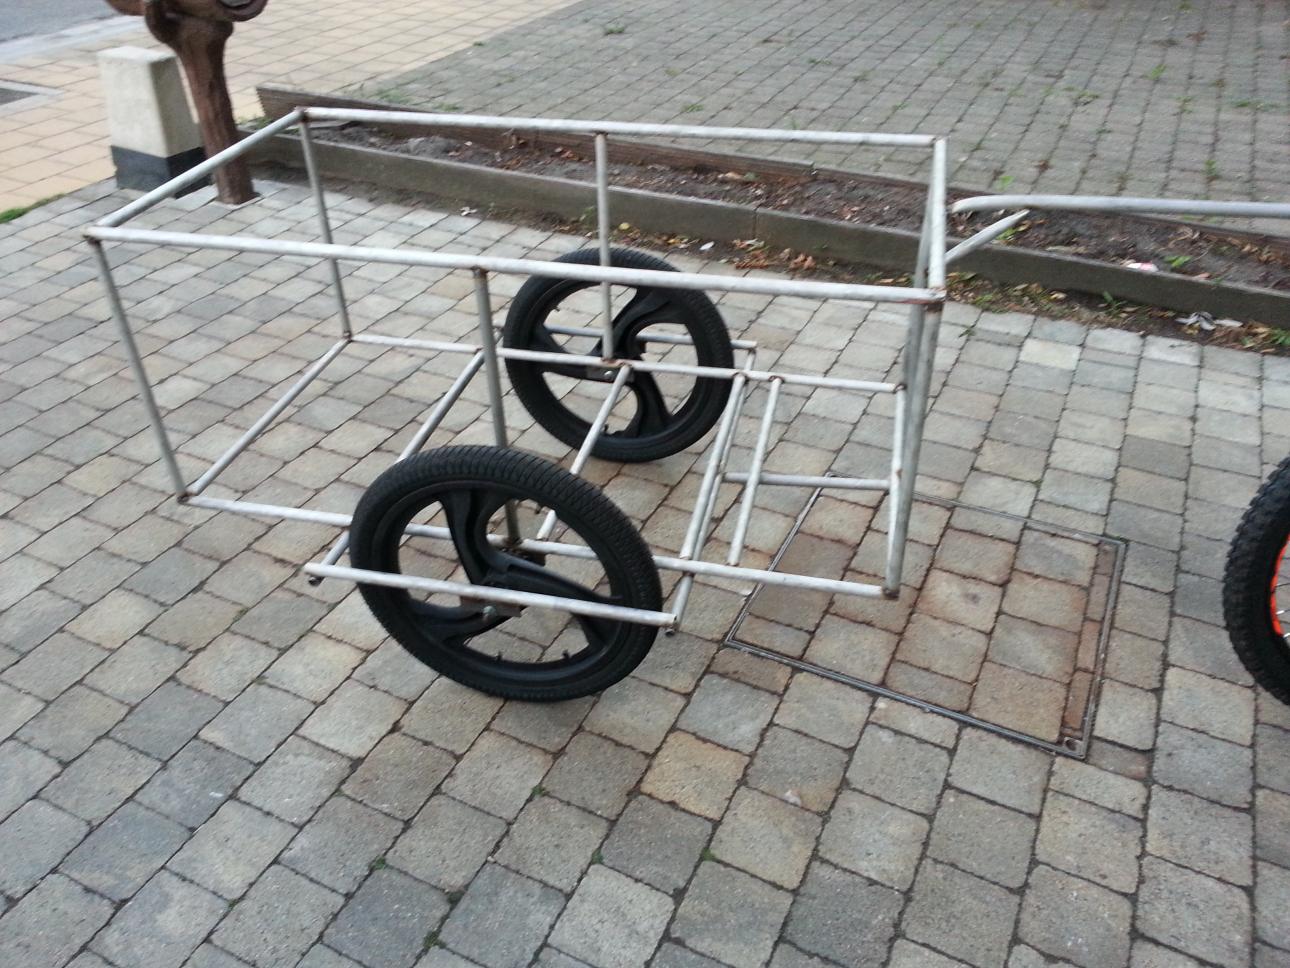 Mijn home made fietskar - Voertuigen - Forum